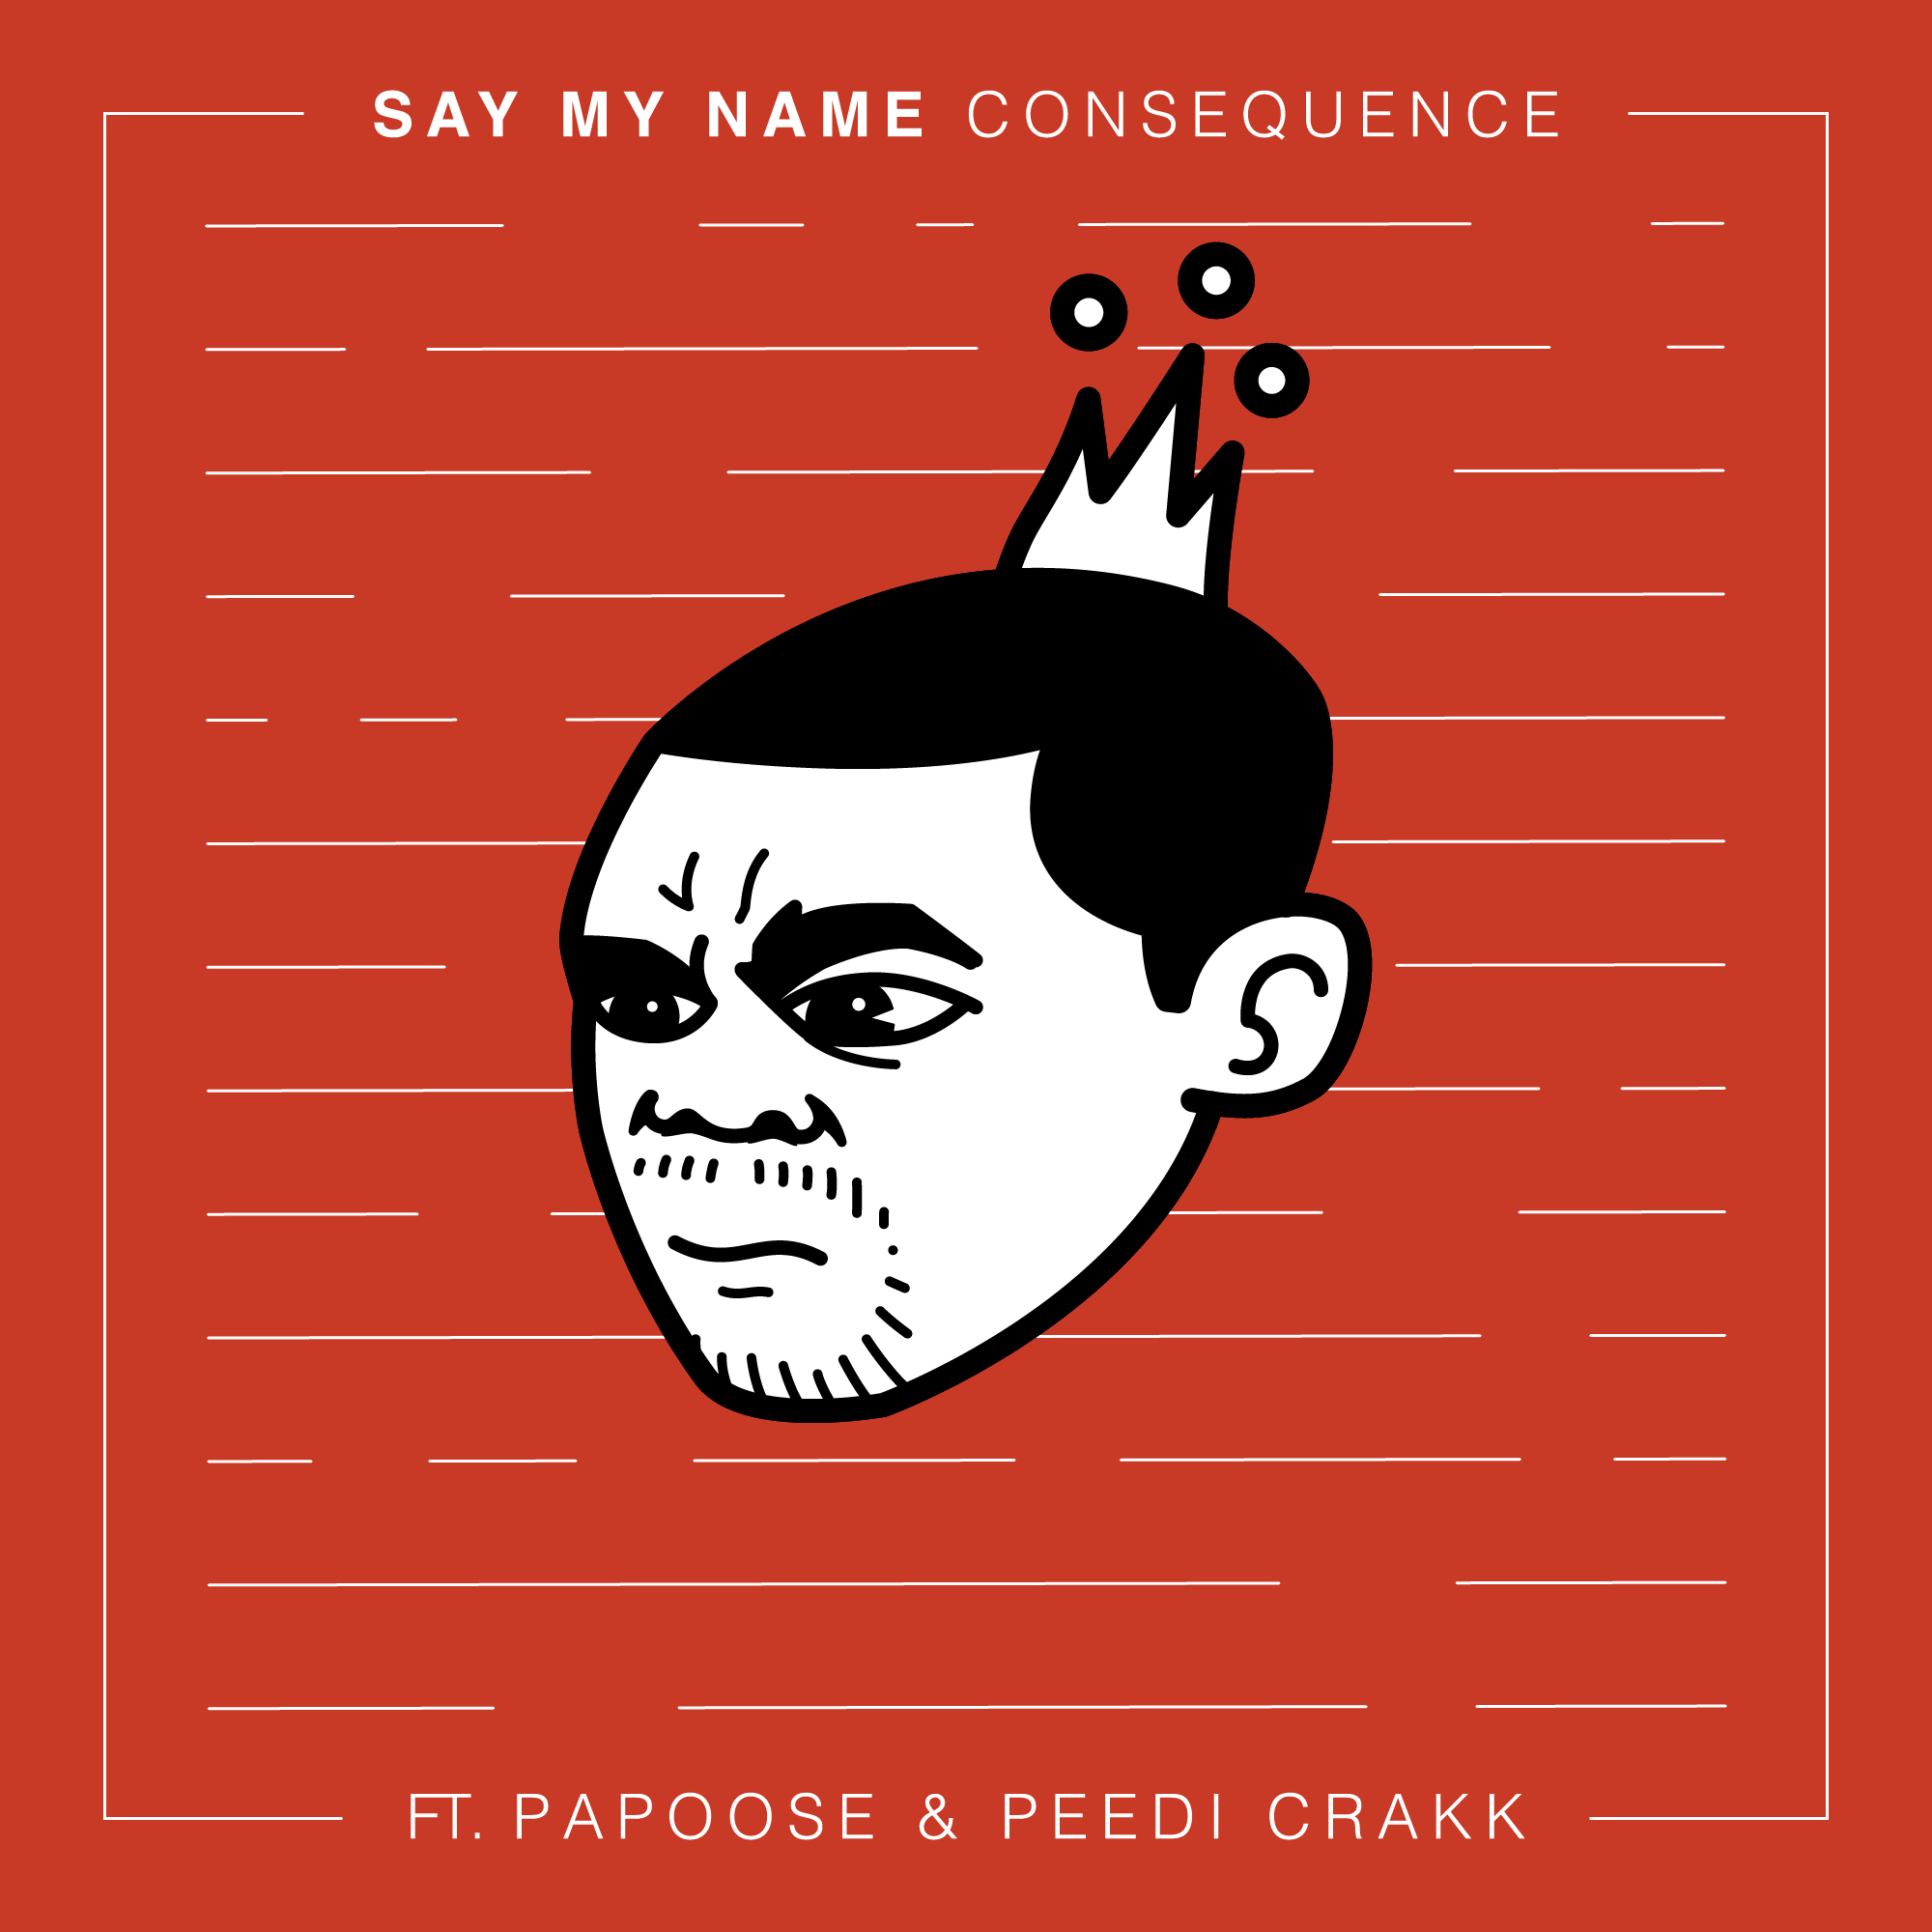 Consequence Peedi Crakk Papoose Say My Name rap album cover art by Maximillian Piras